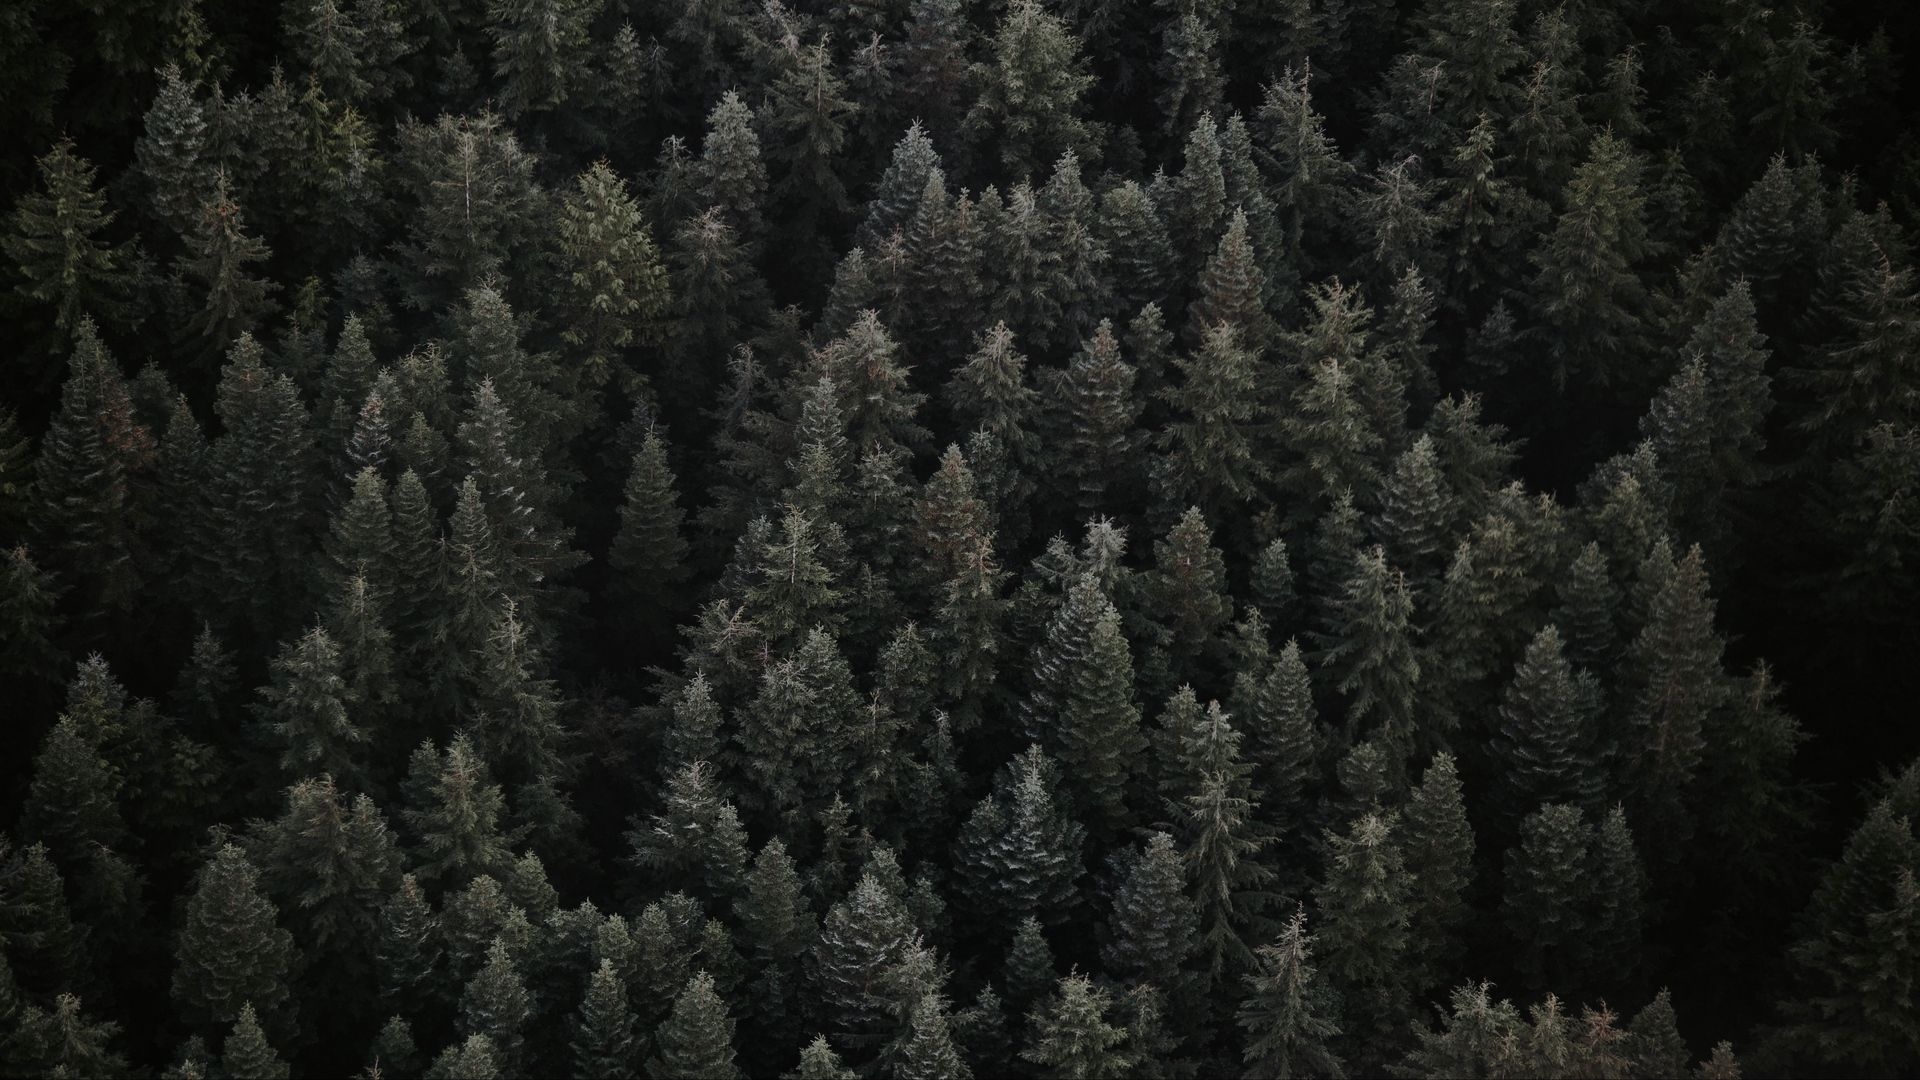 Spruce forest, Breathtaking landscapes, Majestic trees, Tranquil scenery, 1920x1080 Full HD Desktop